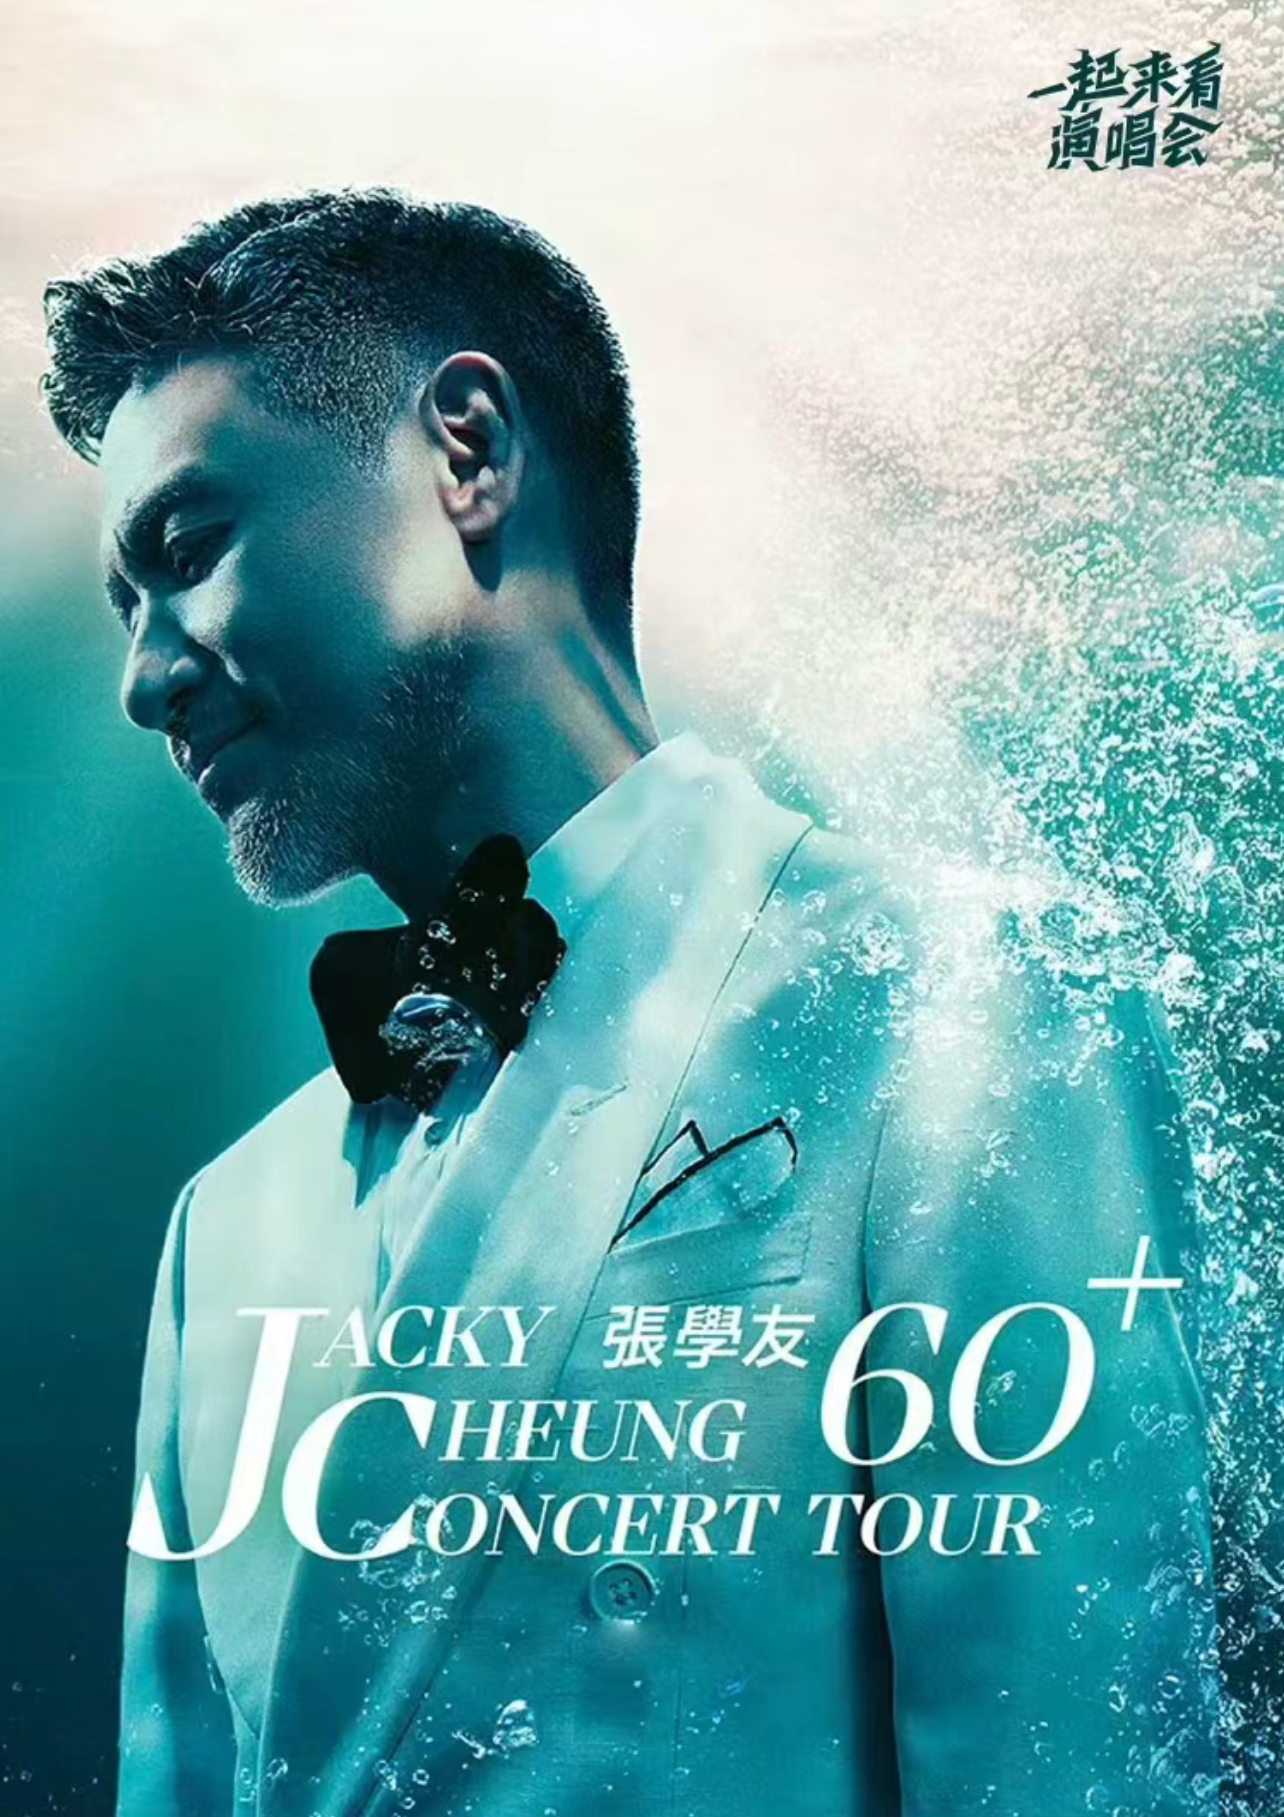 JACKY CHEUNG 60+ CONCERT TOUR 张学友60+巡回演唱会-重庆站